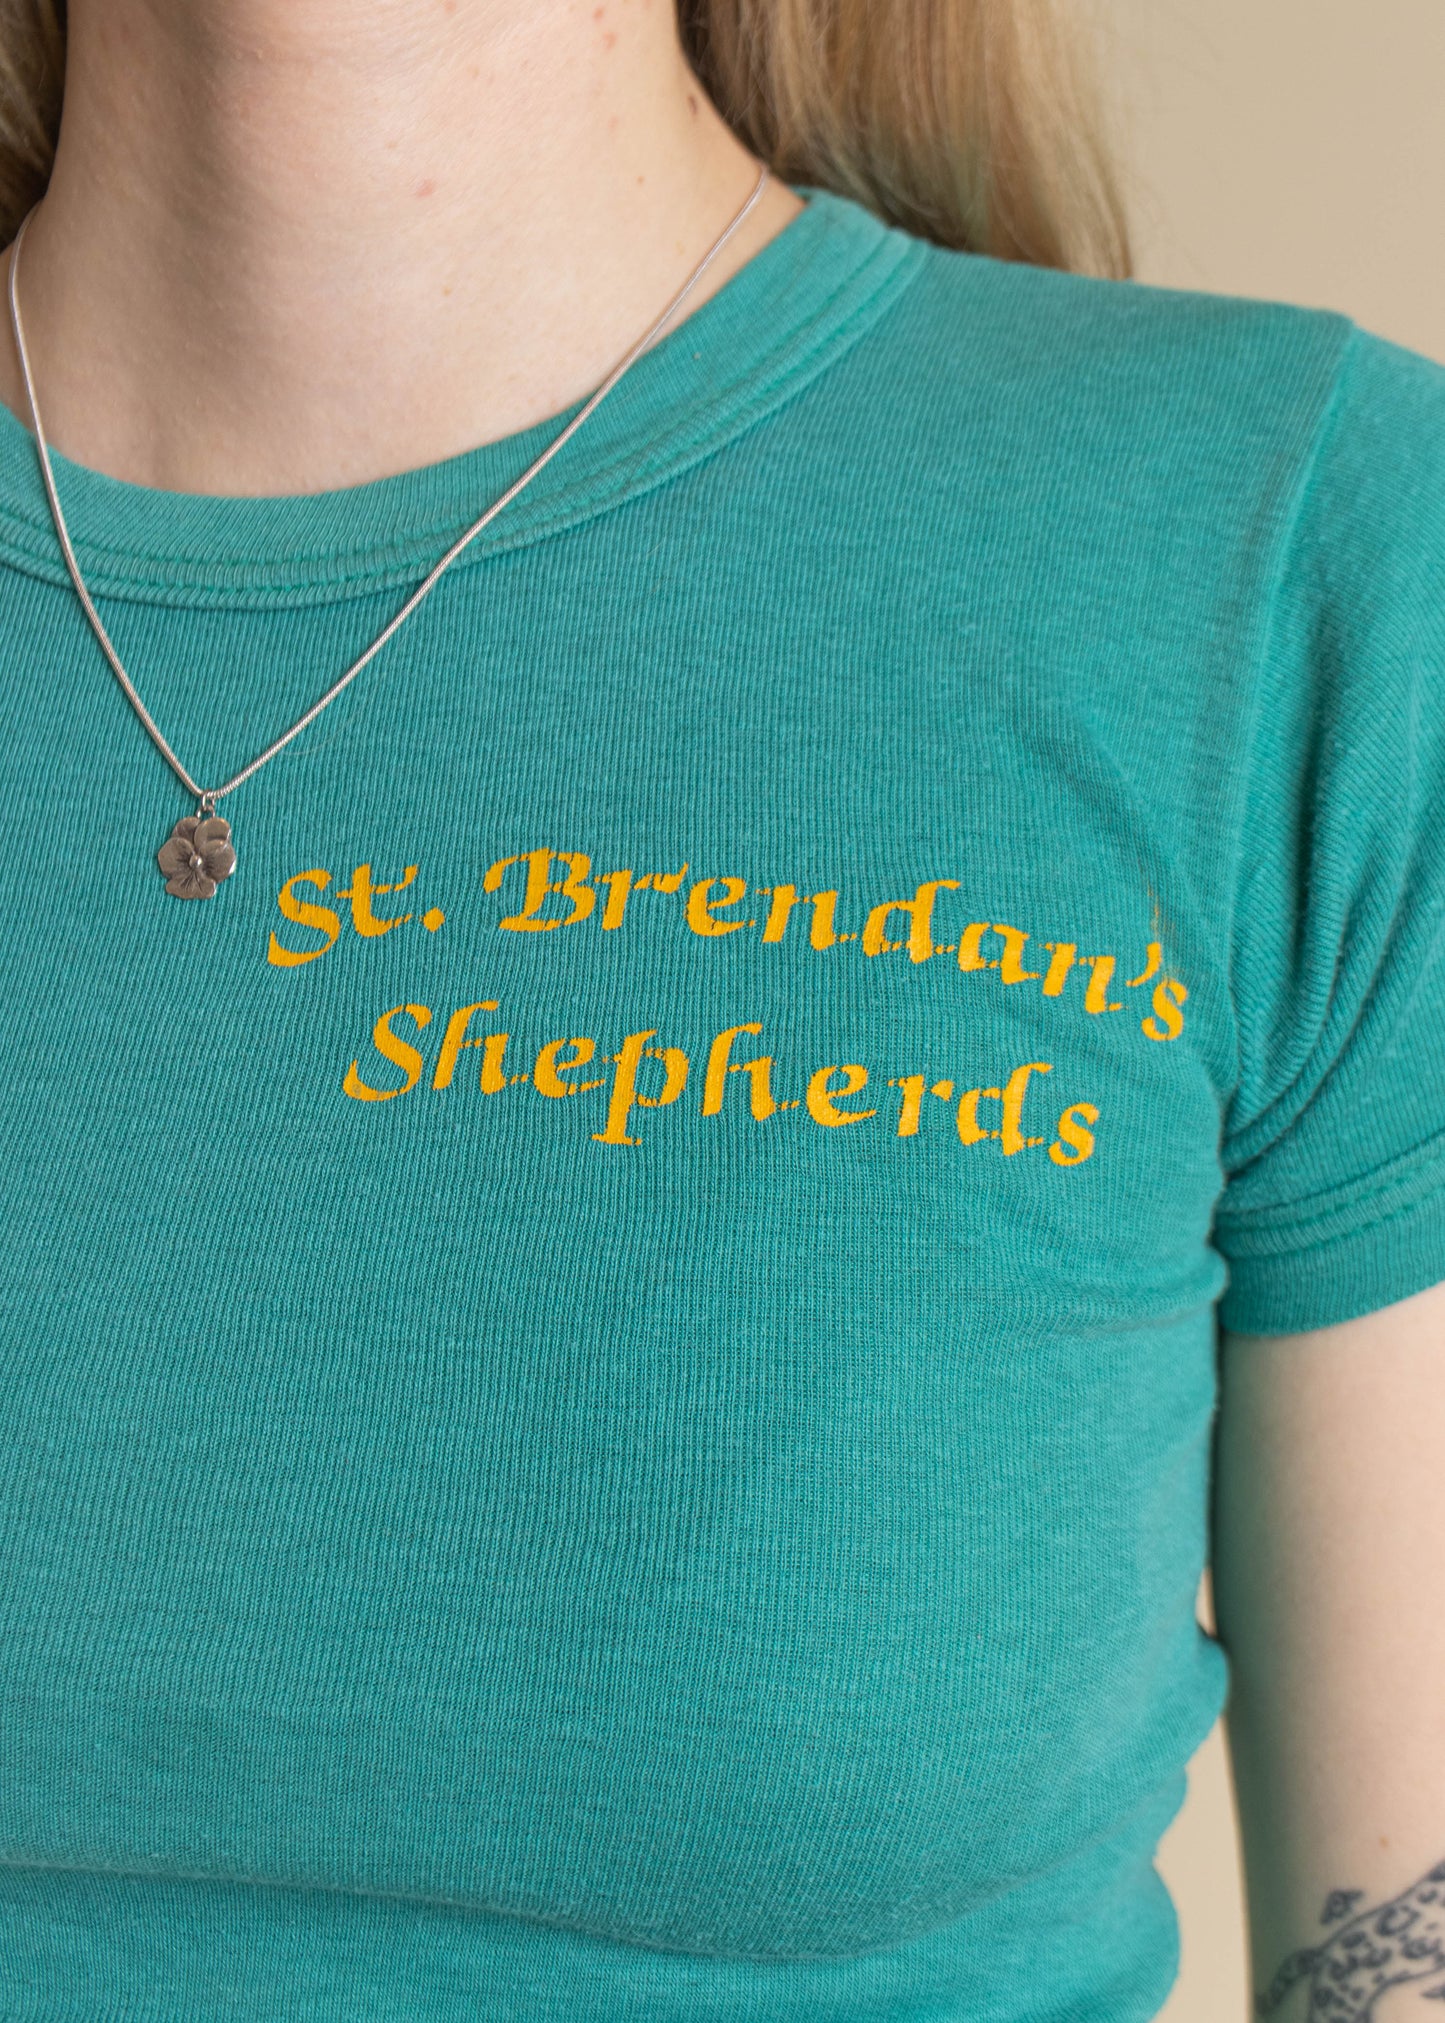 1970s St. Brendan's Souvenir Ringer T-Shirt Size 3XS/2XS